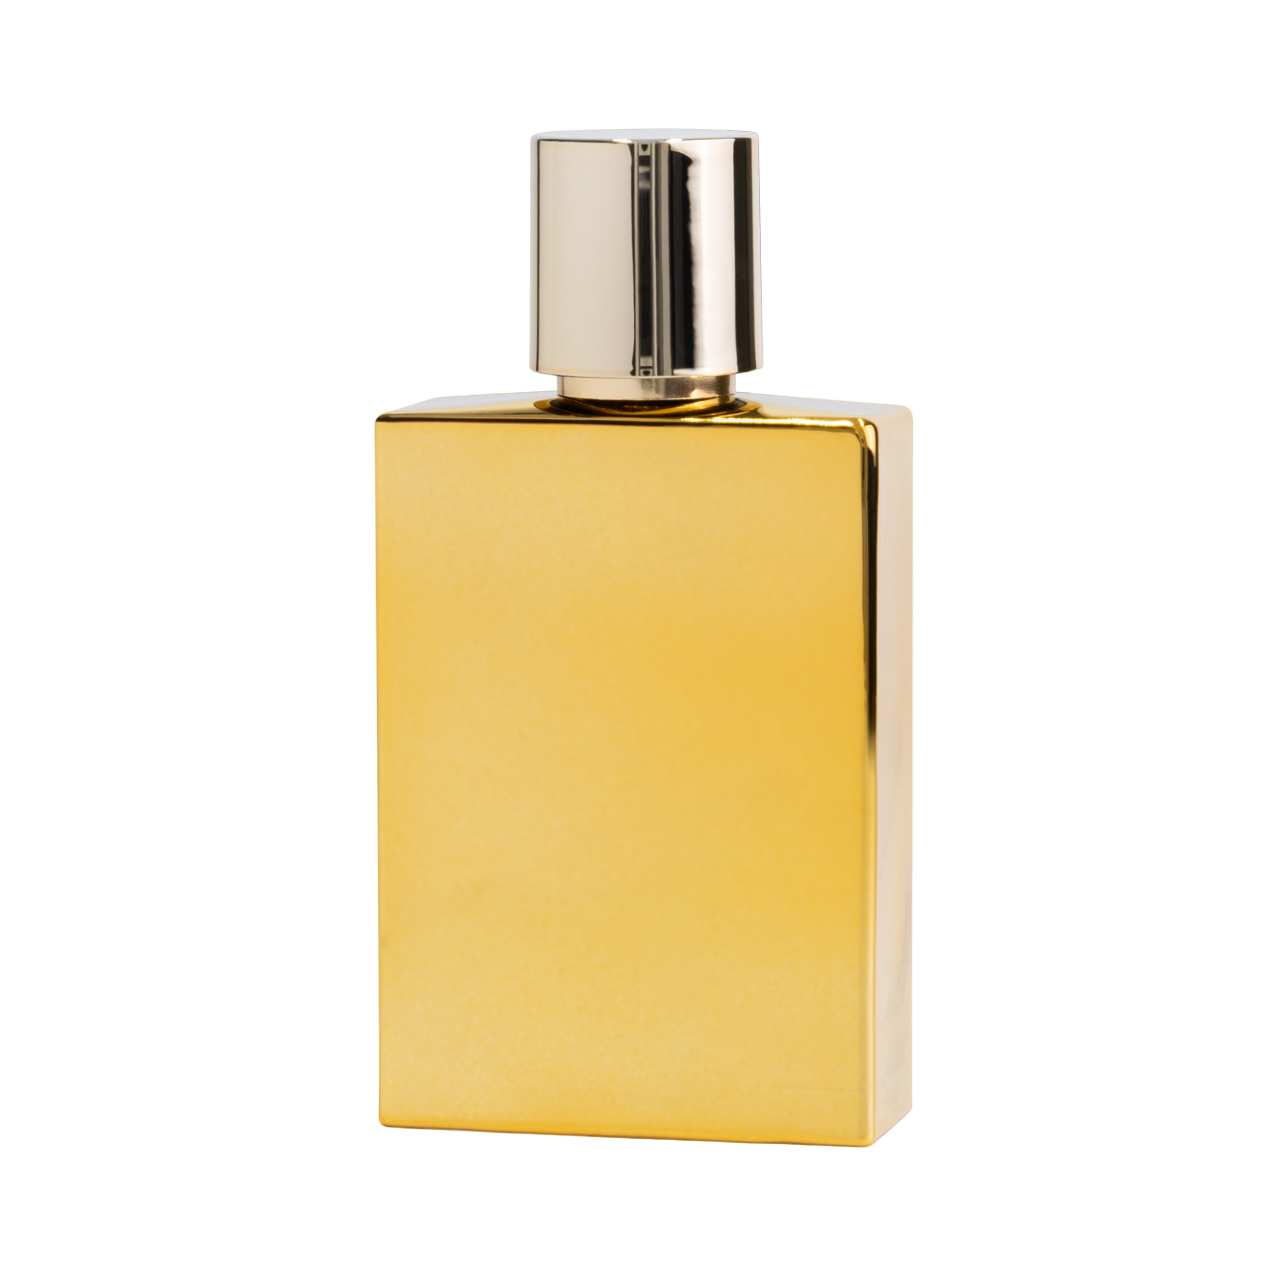 Golden (75ml parfum)